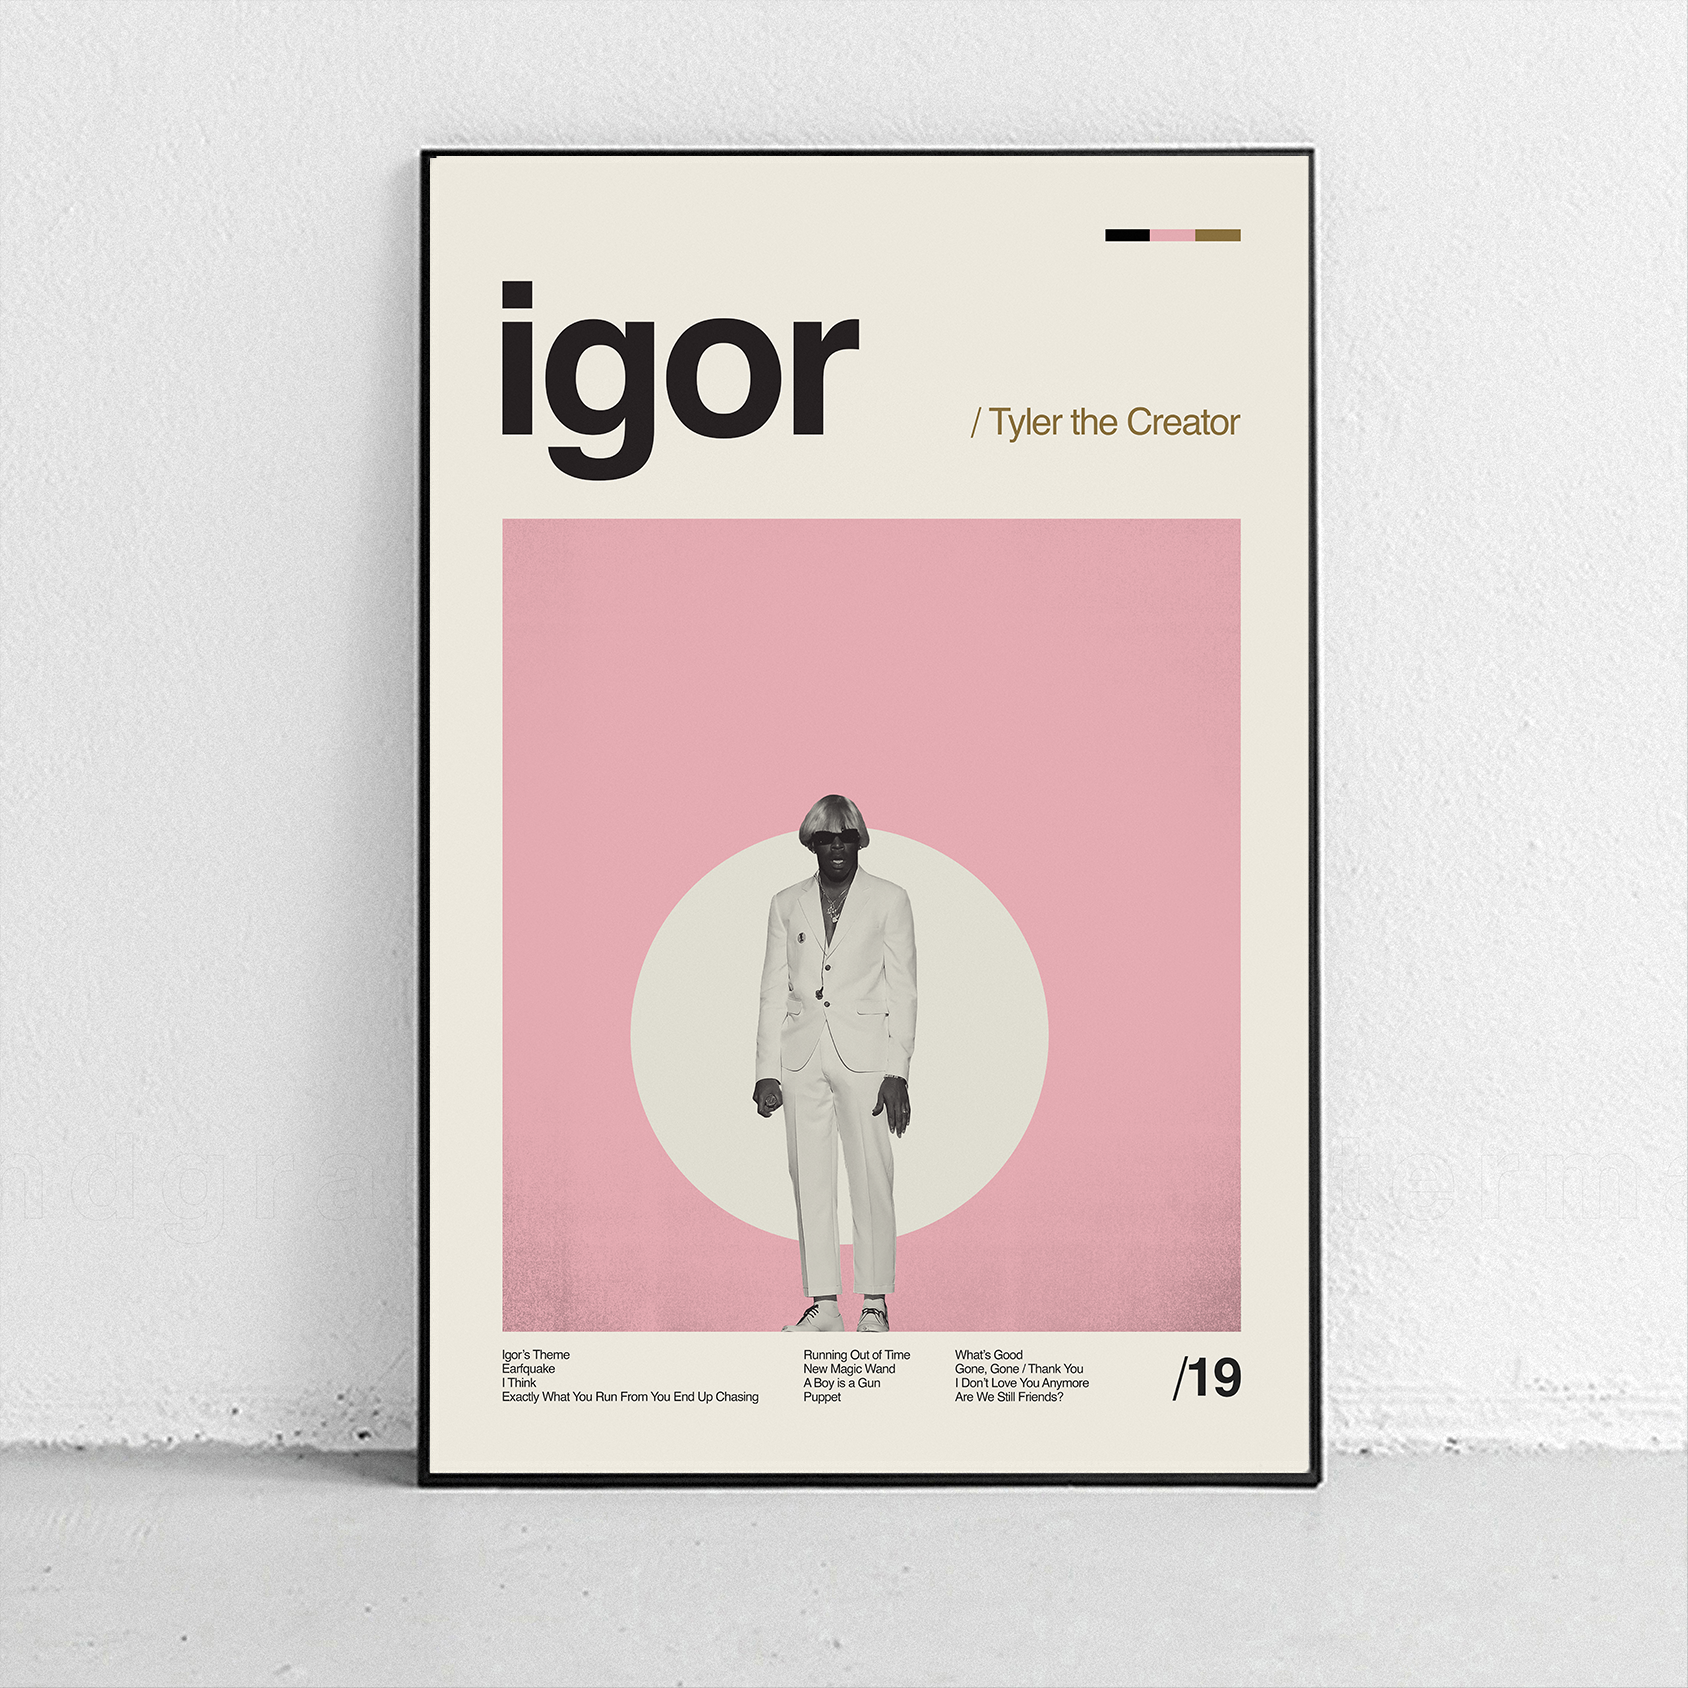 Album Posters - IGOR by Tyler, the Creator